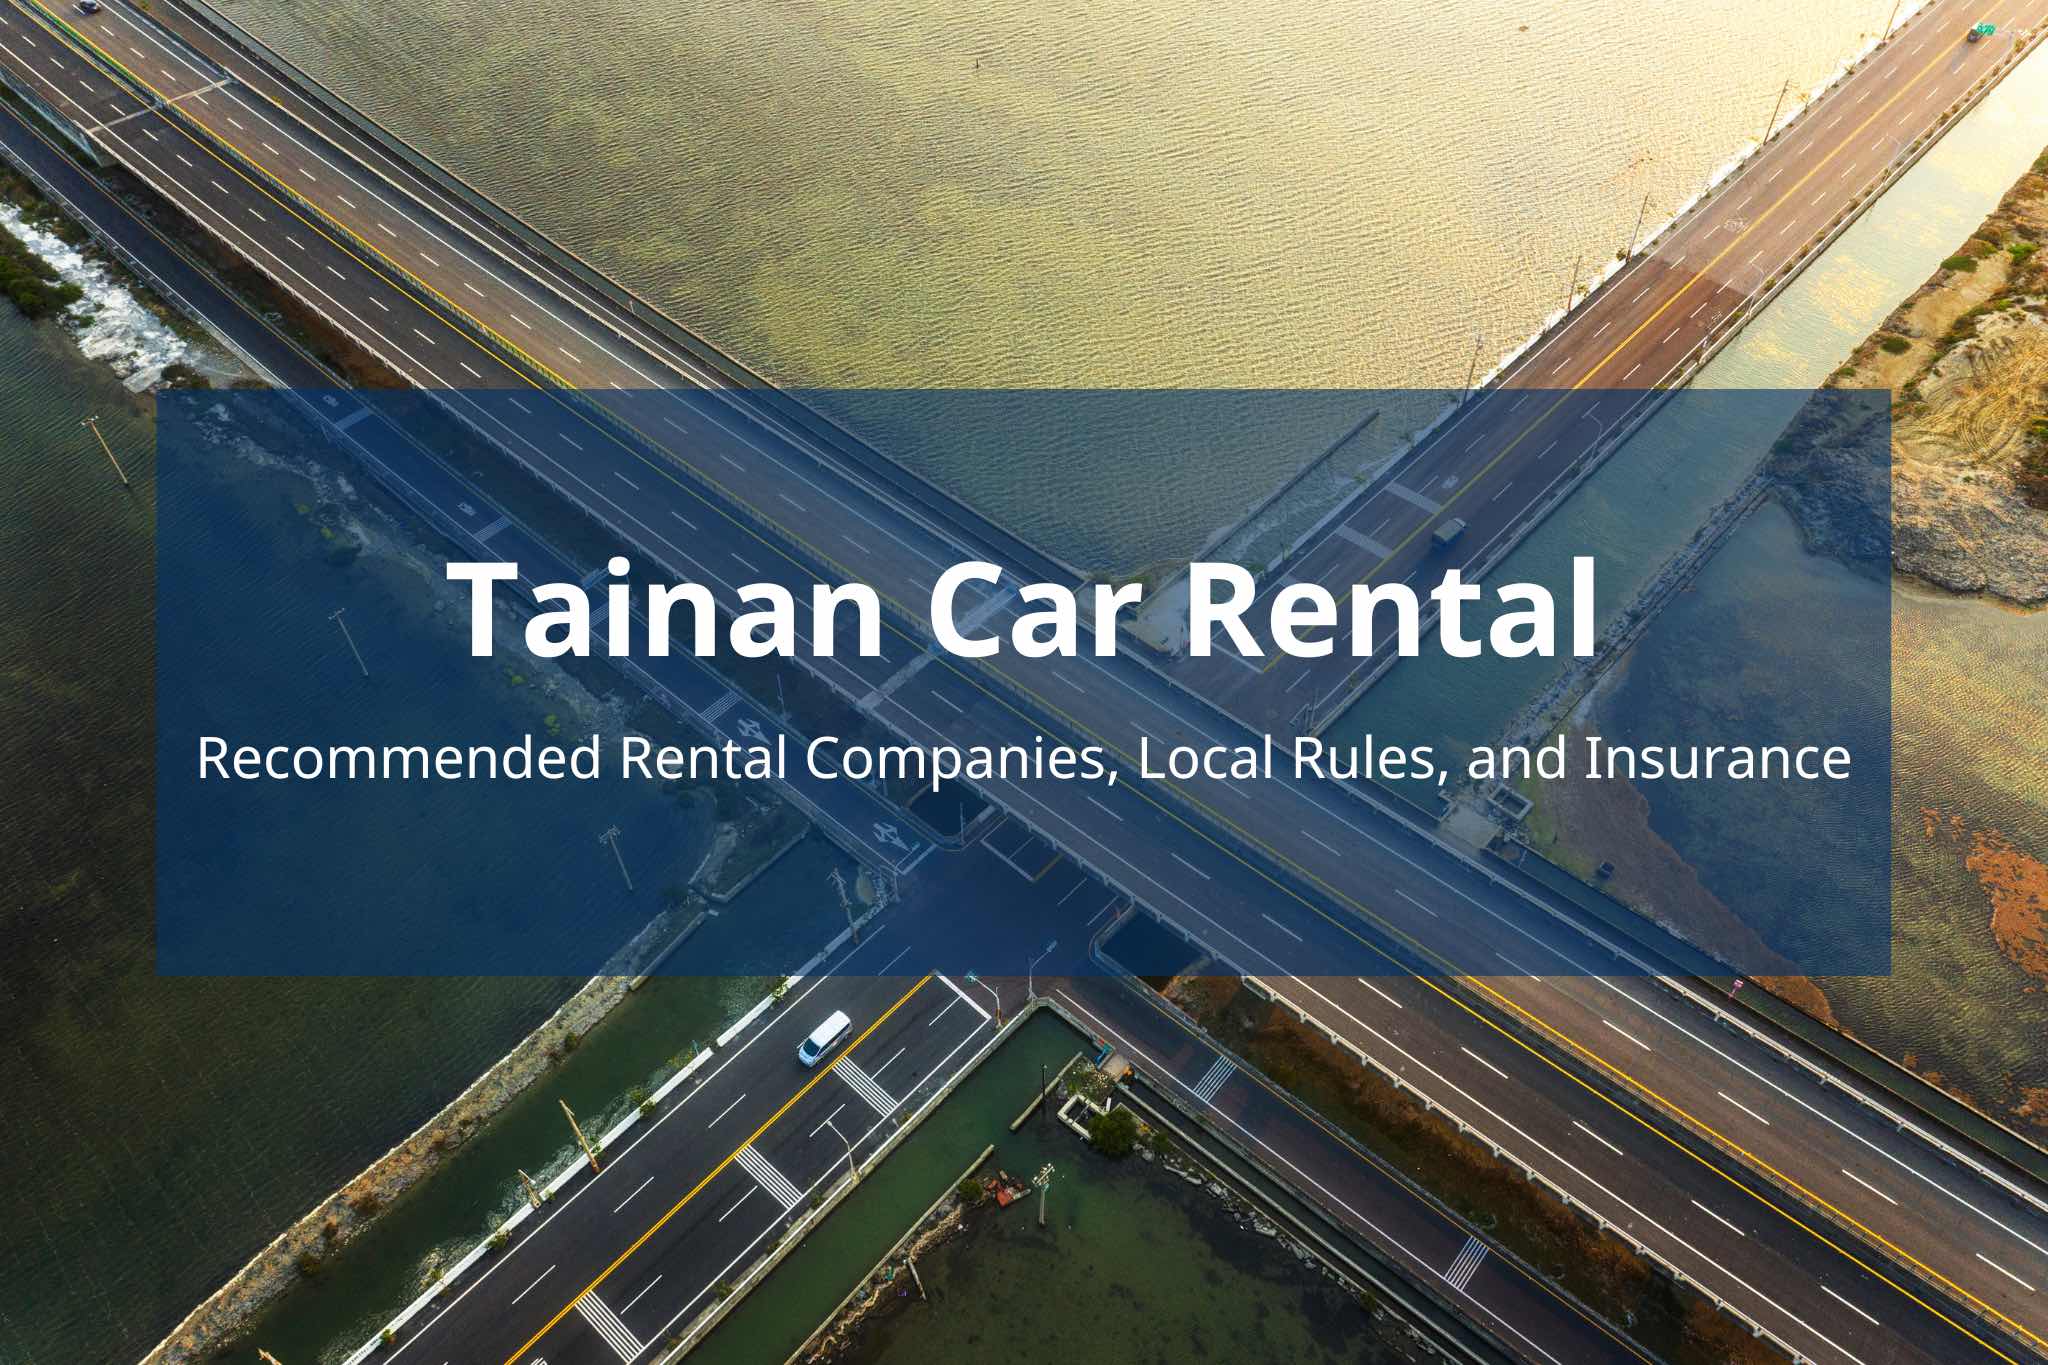 Tainan Car Rental Blog Cover